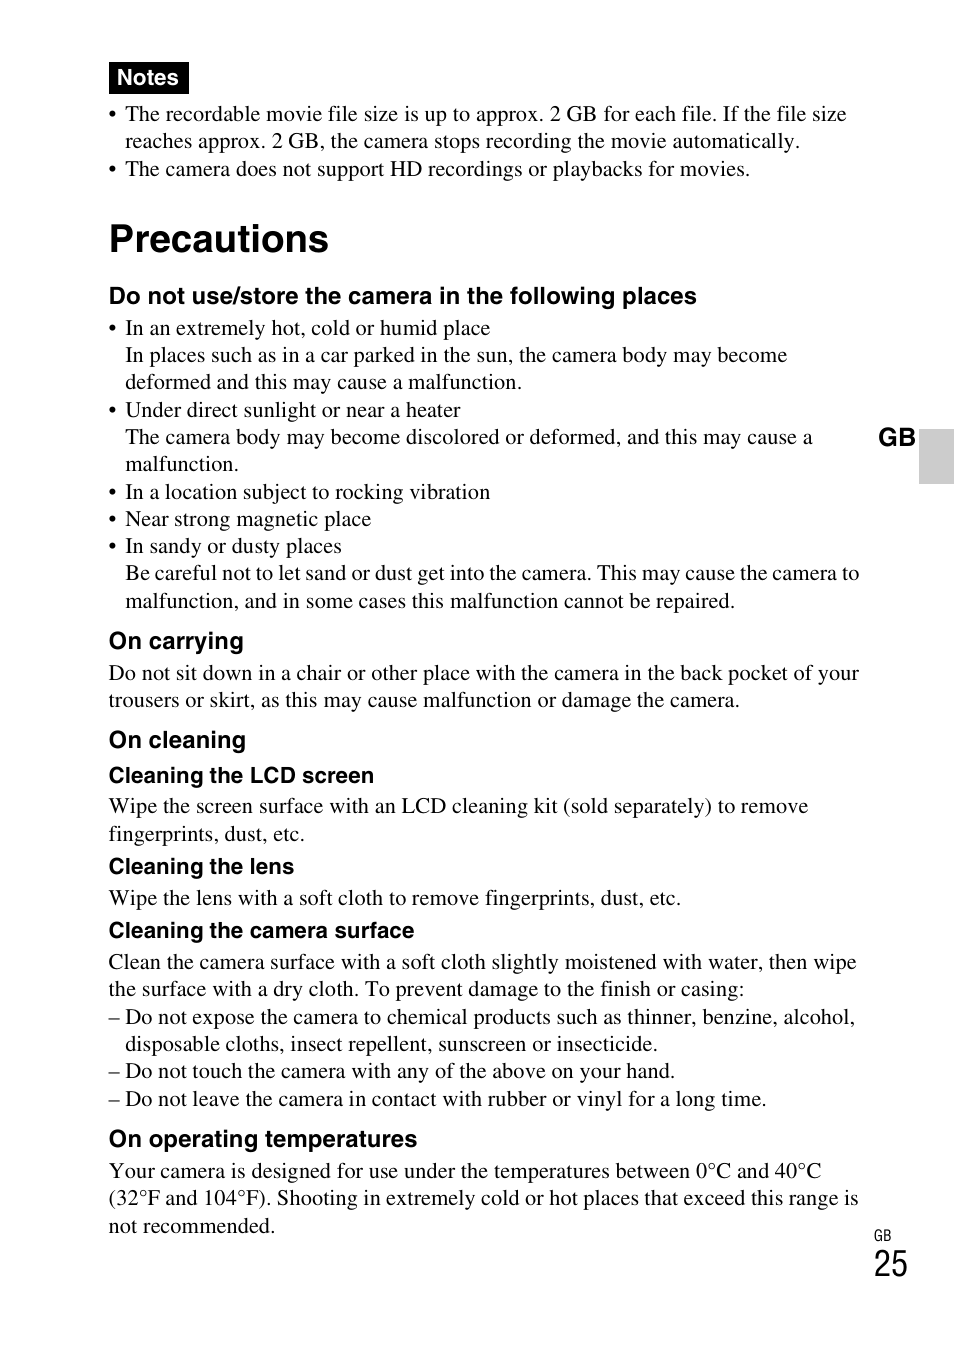 Precautions | Sony DSC-W310 User Manual | Page 25 / 56